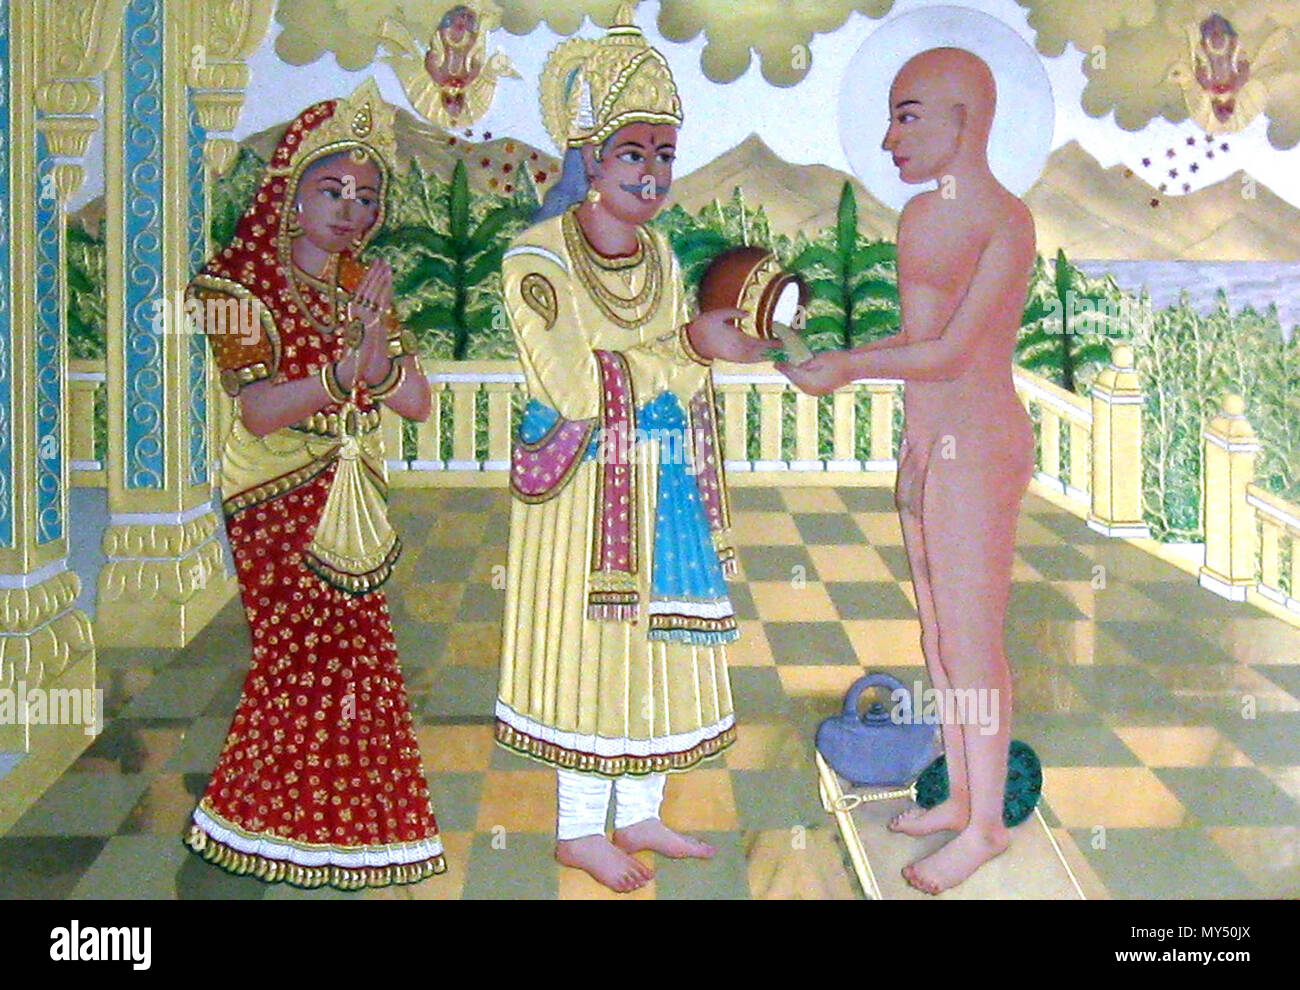 . English: This is Plate from temple shows Mahavira acception alms from Lay Jain householder. 19 December 2009. Anishshah19 338 Mahavira Accepting Alms Stock Photo